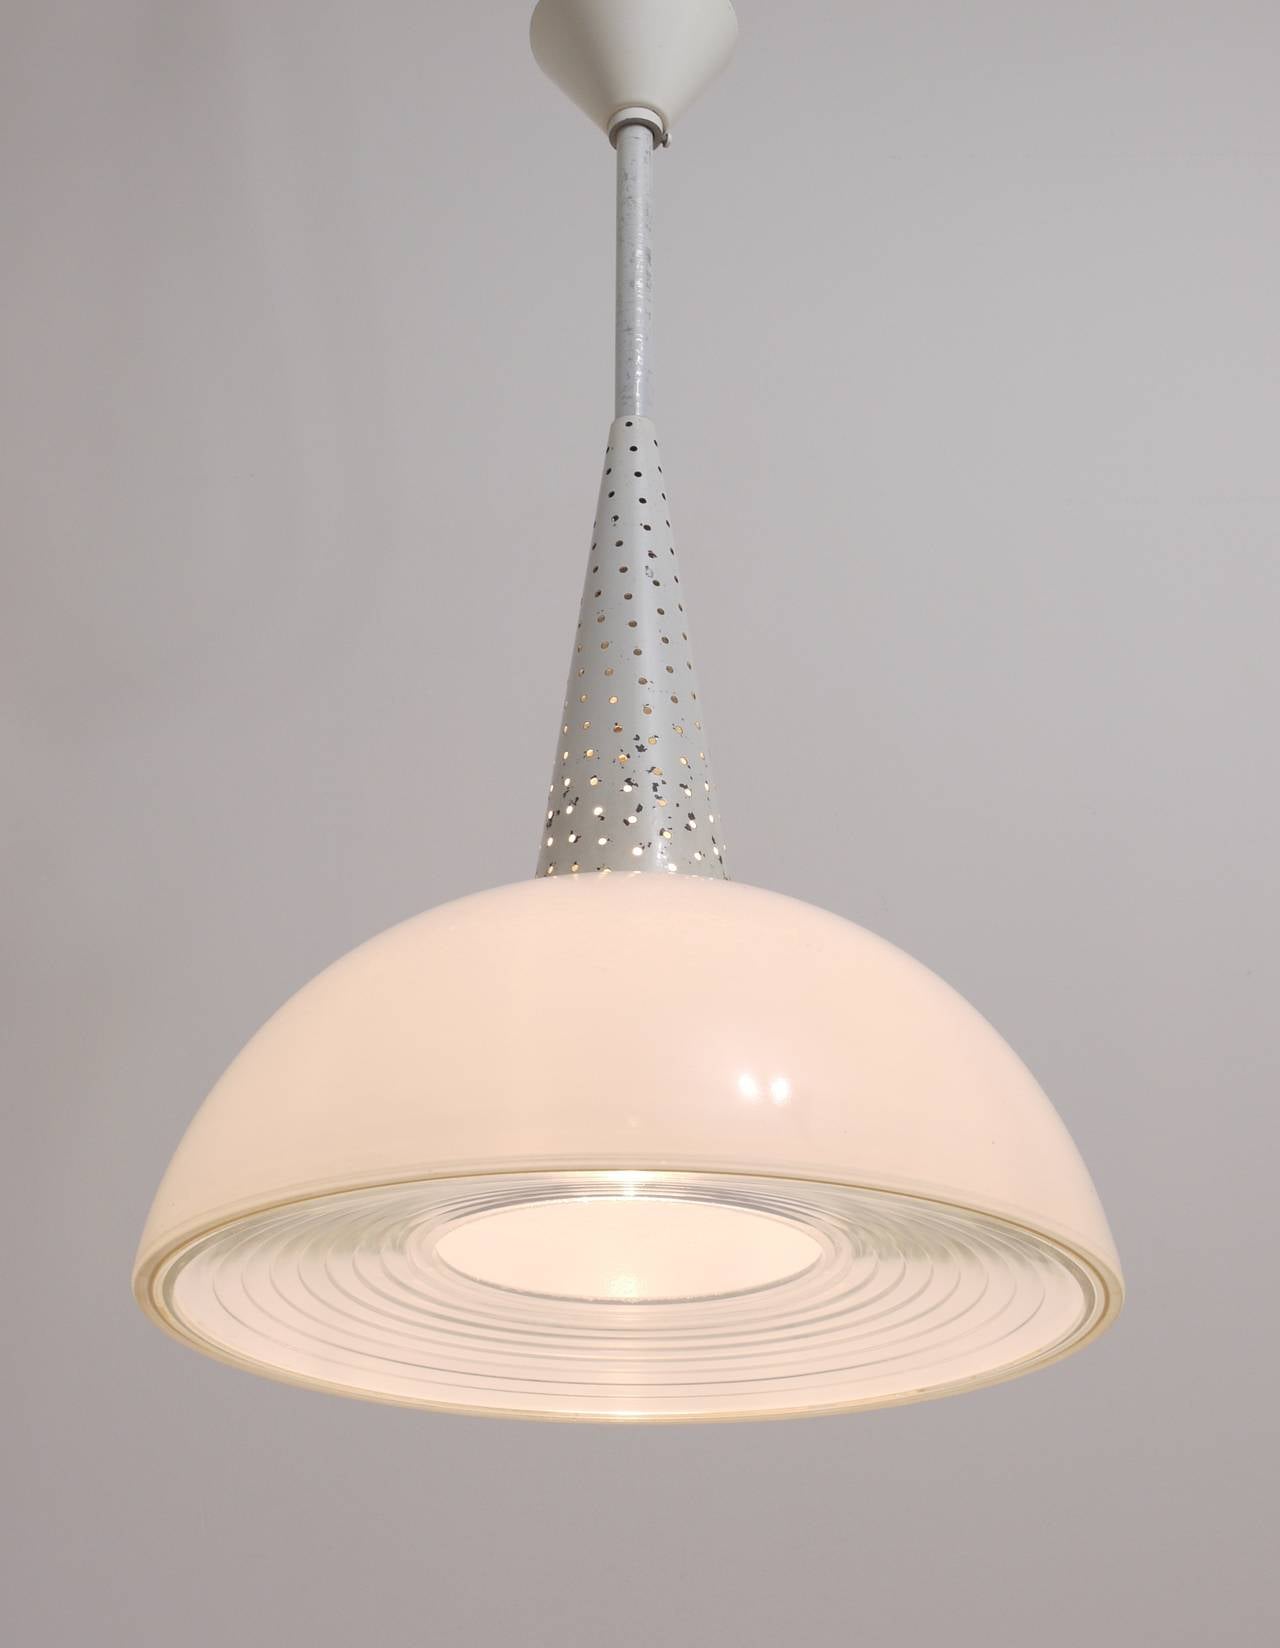 Mathieu Matégot Perforated Midcentury Pendant Lamp, Holophane, France, 1950s For Sale 1